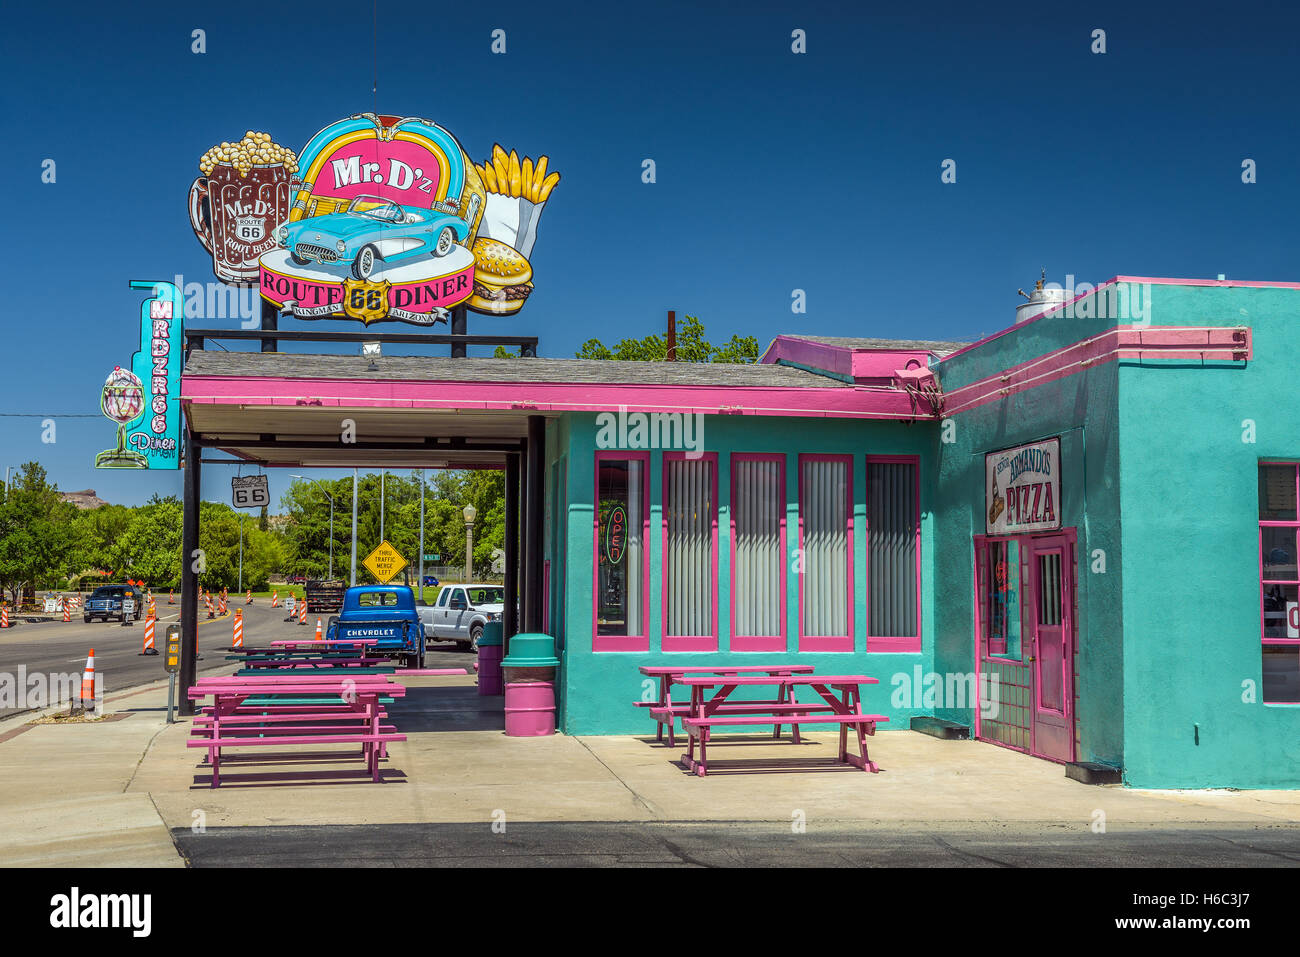 Il sig. D'z Route 66 Diner in Kingman situato sulla storica Route 66. Foto Stock